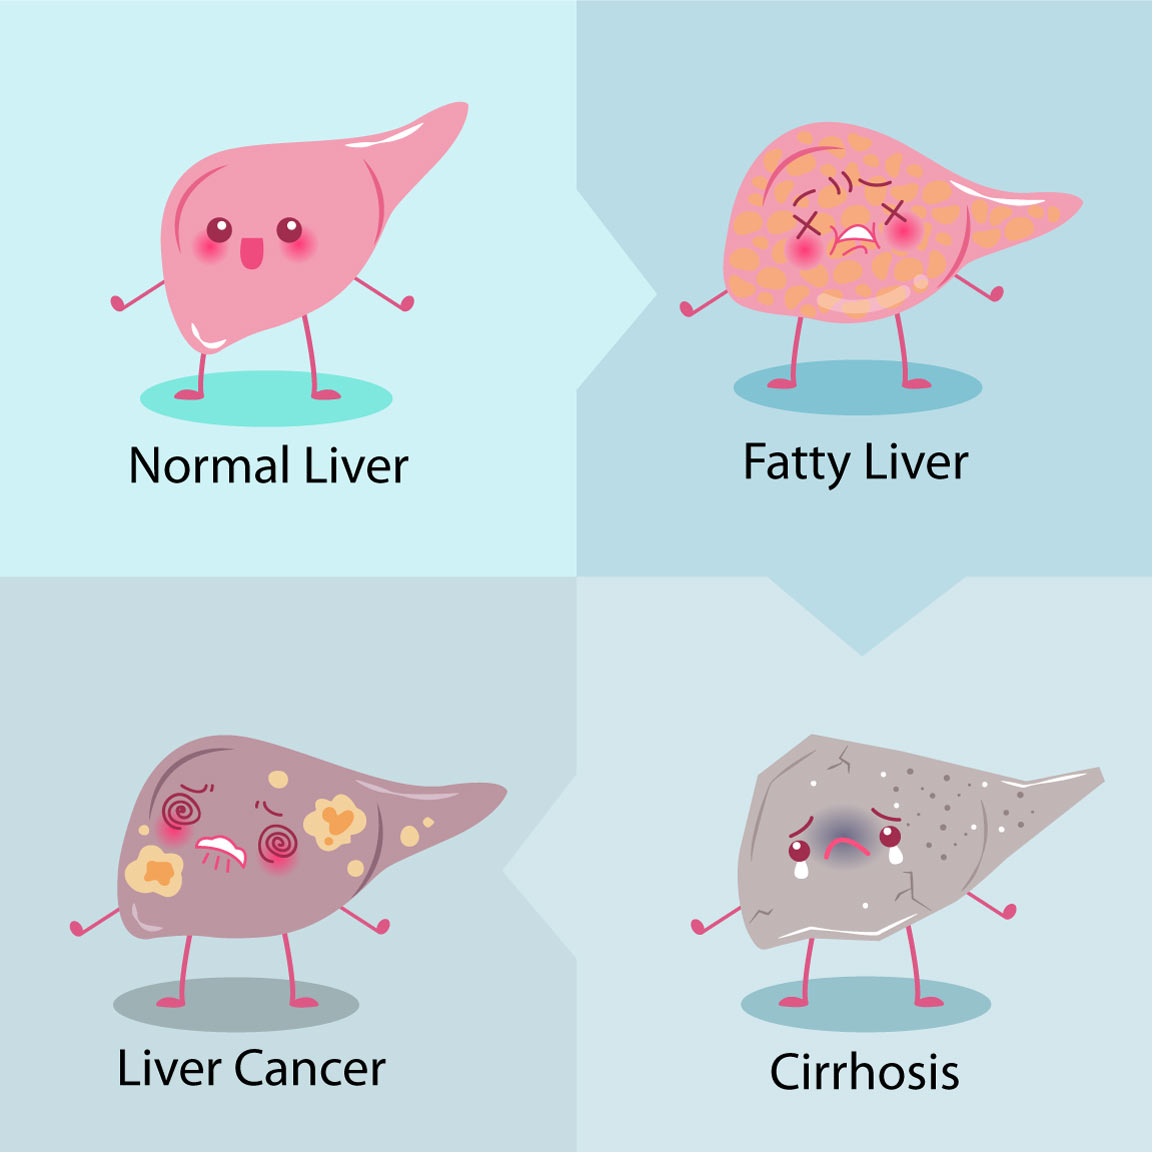 Alpha lipoic acid may help prevent liver disease.